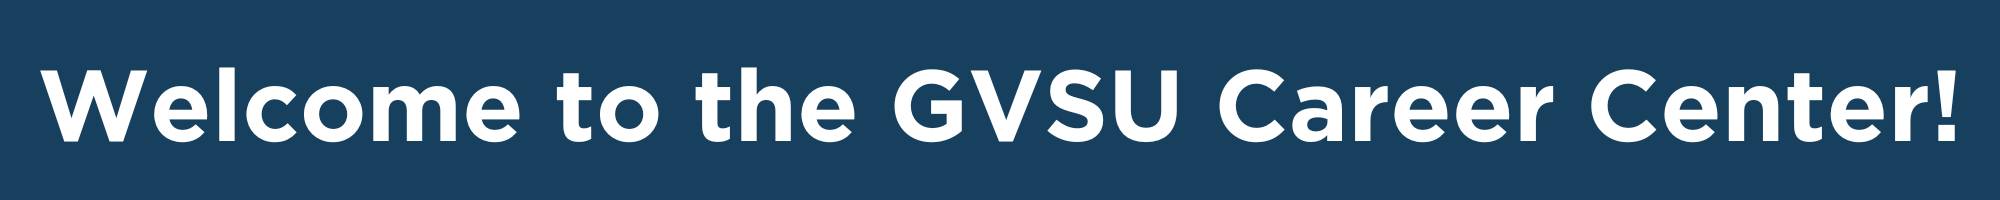 welcome to the gvsu career center